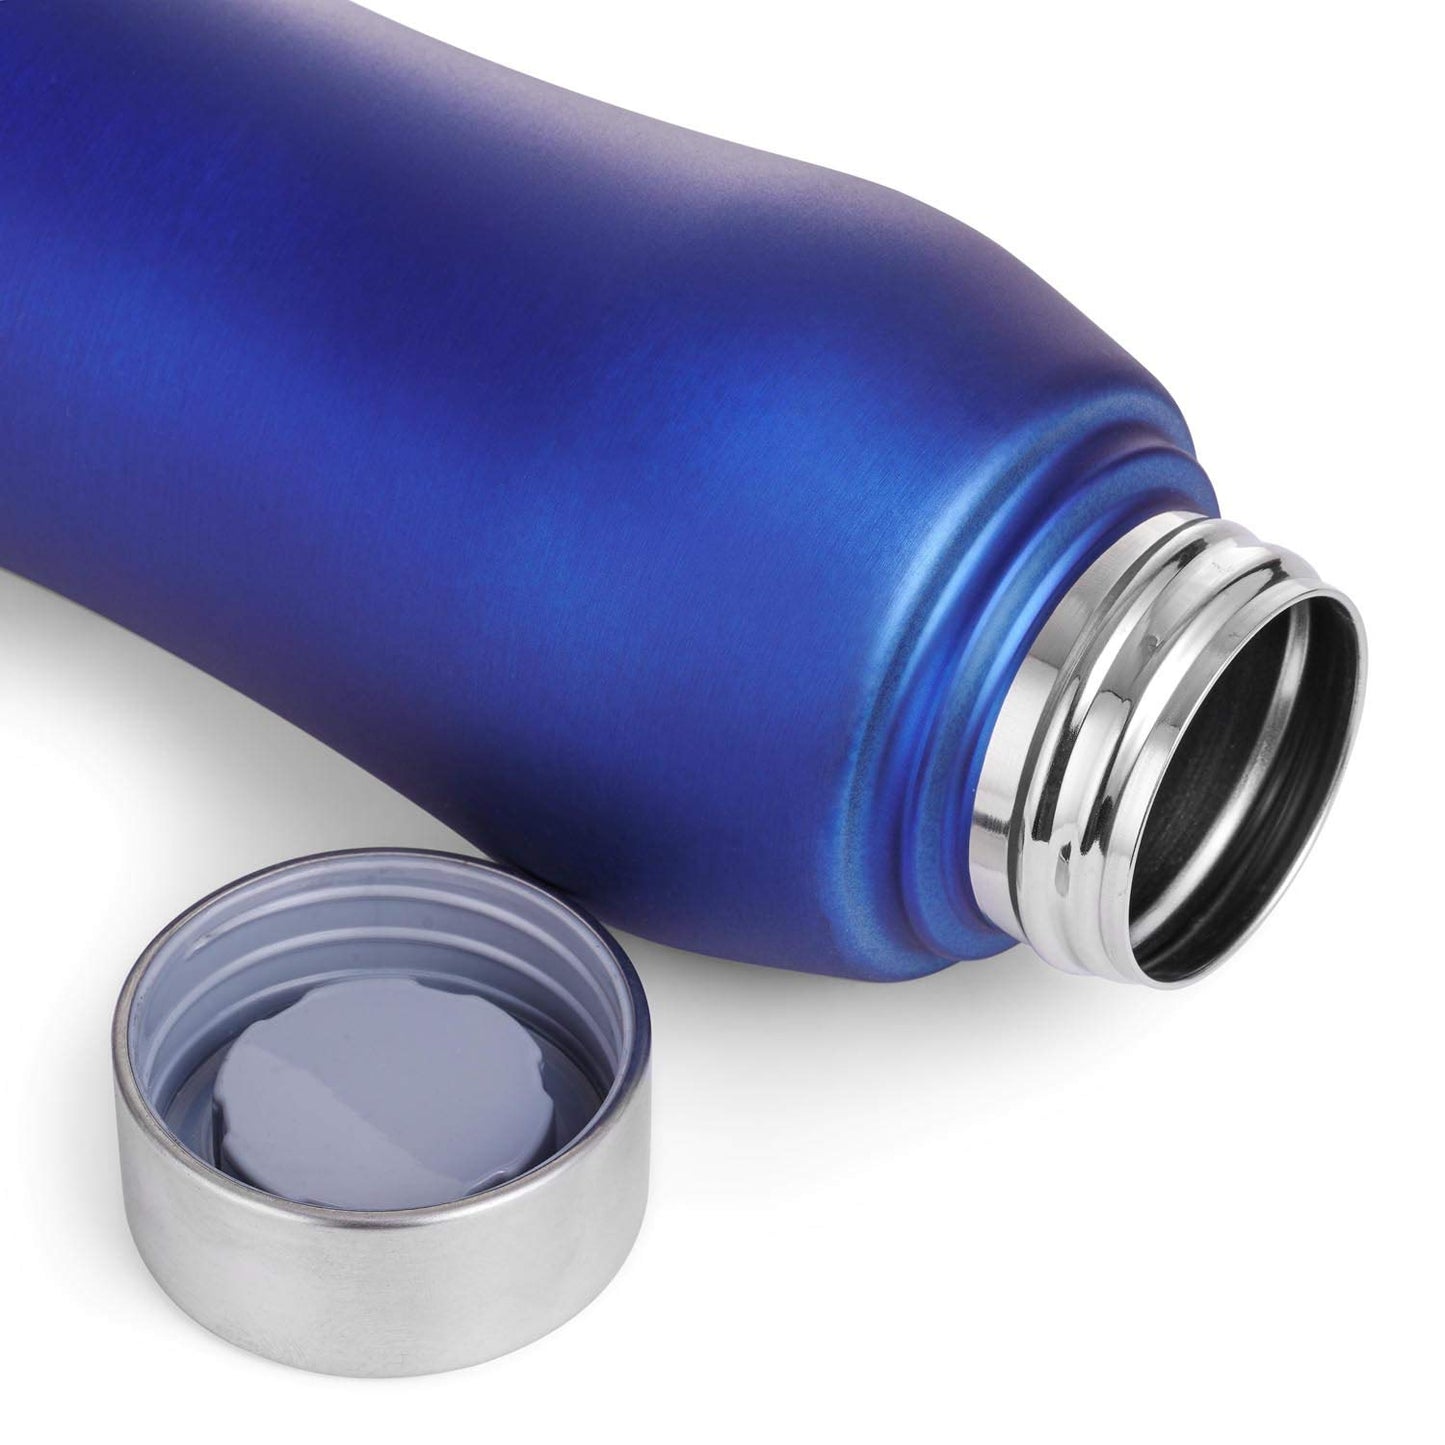 Stainless Steel Designer Water Bottle Set of Three,1 Litre (BLUE)